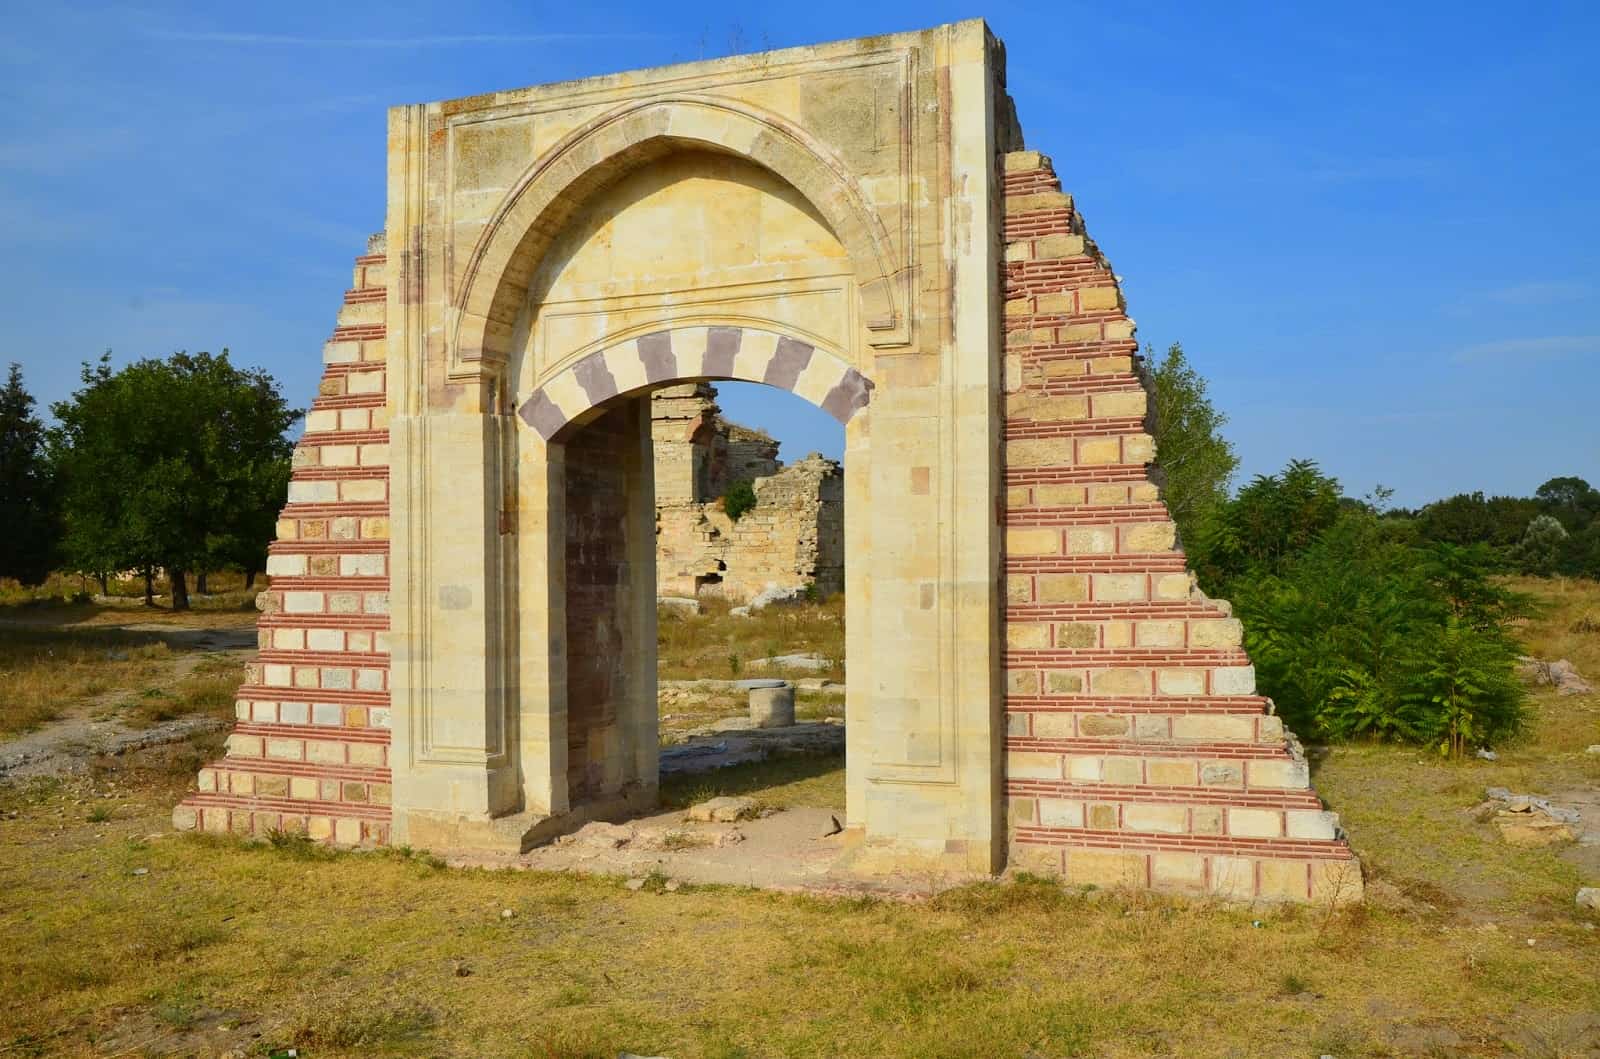 Palace gate at Sarayiçi in Edirne, Turkey